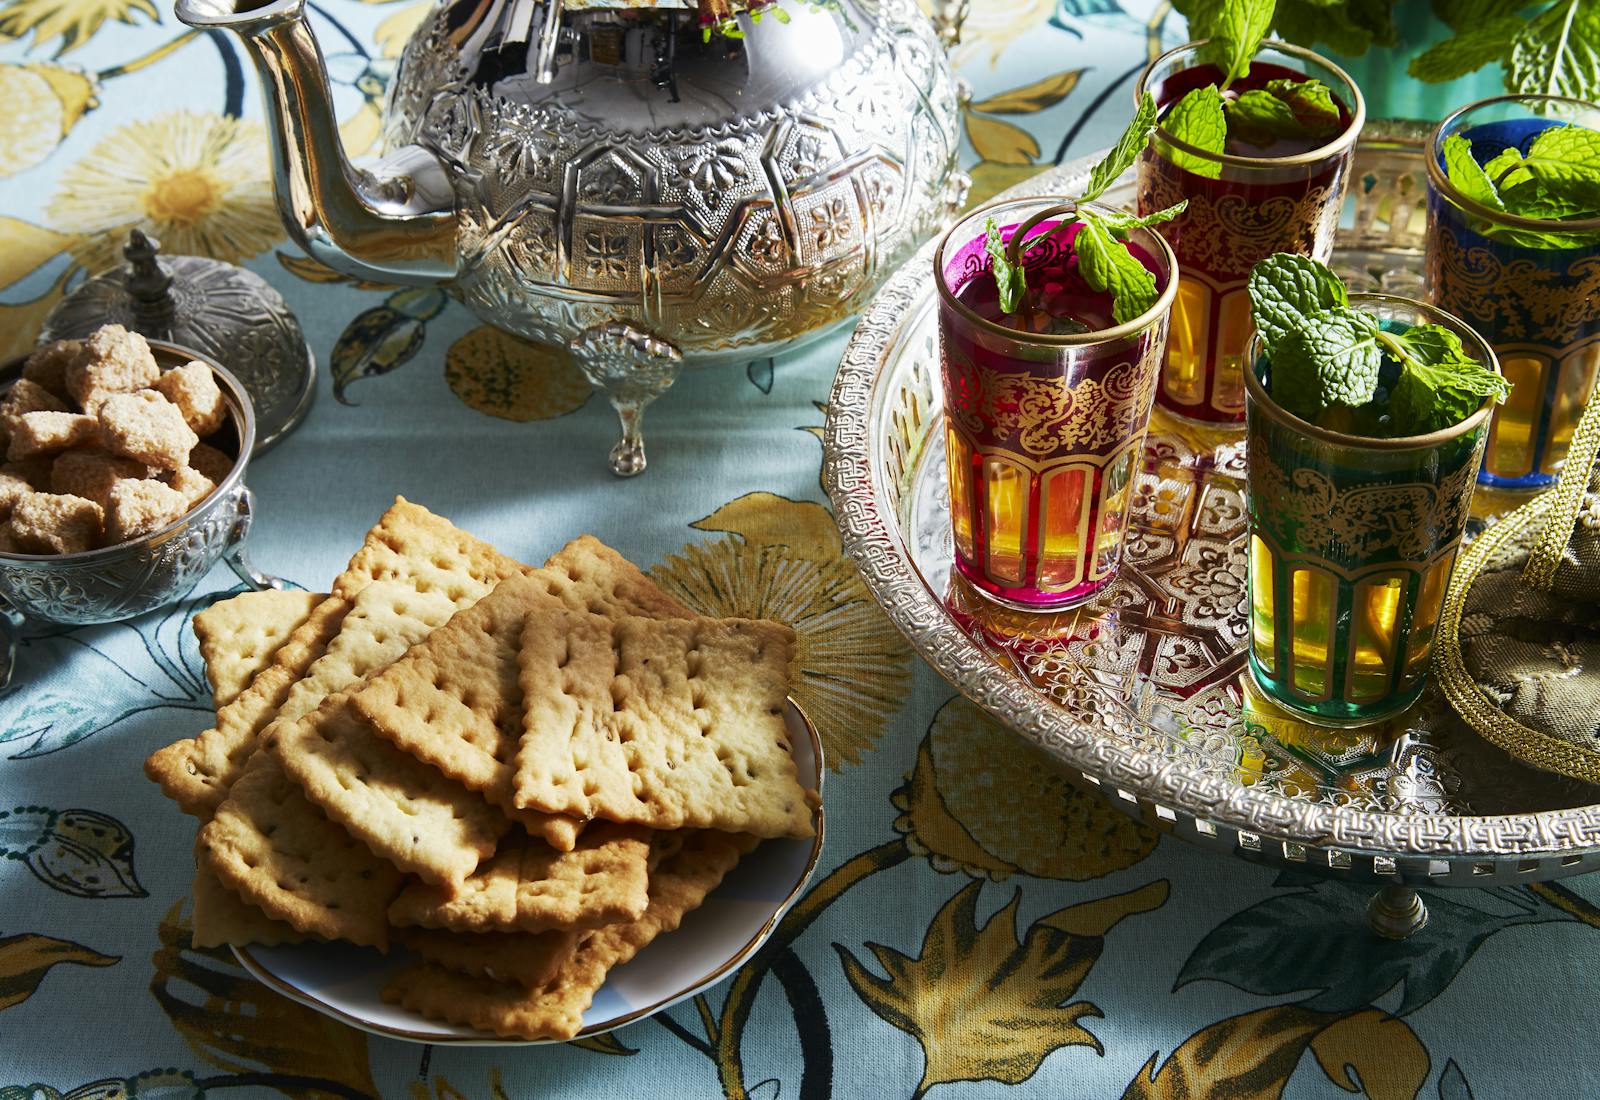 Rifat piled on plate alongside Moroccan tea.